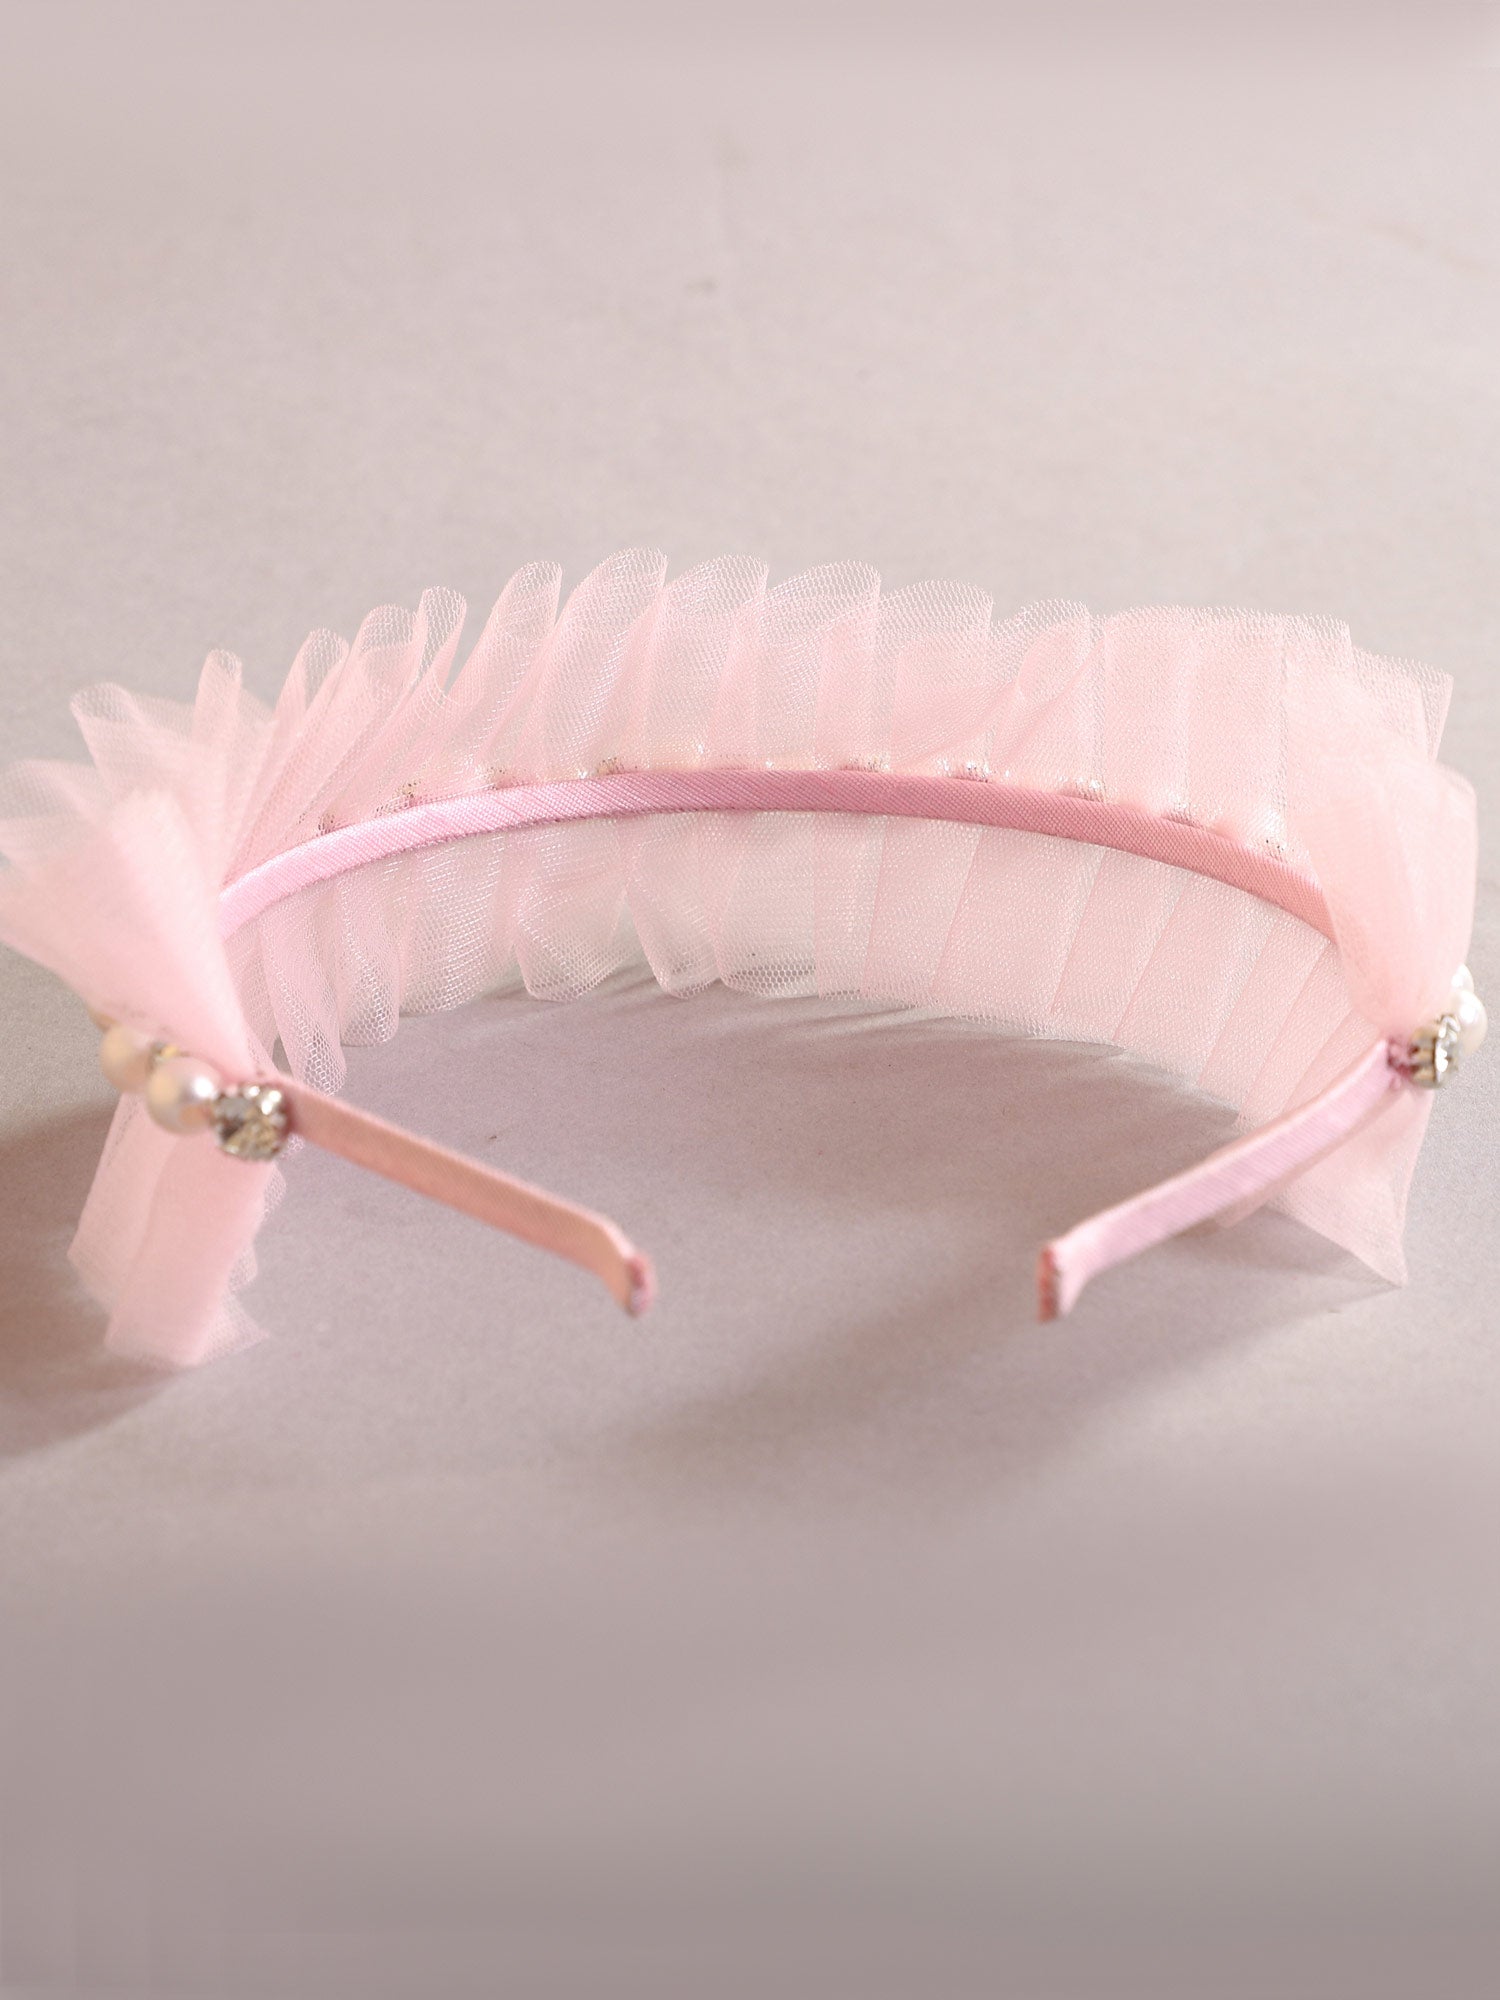 Elegant Pink Chic Beads Headband